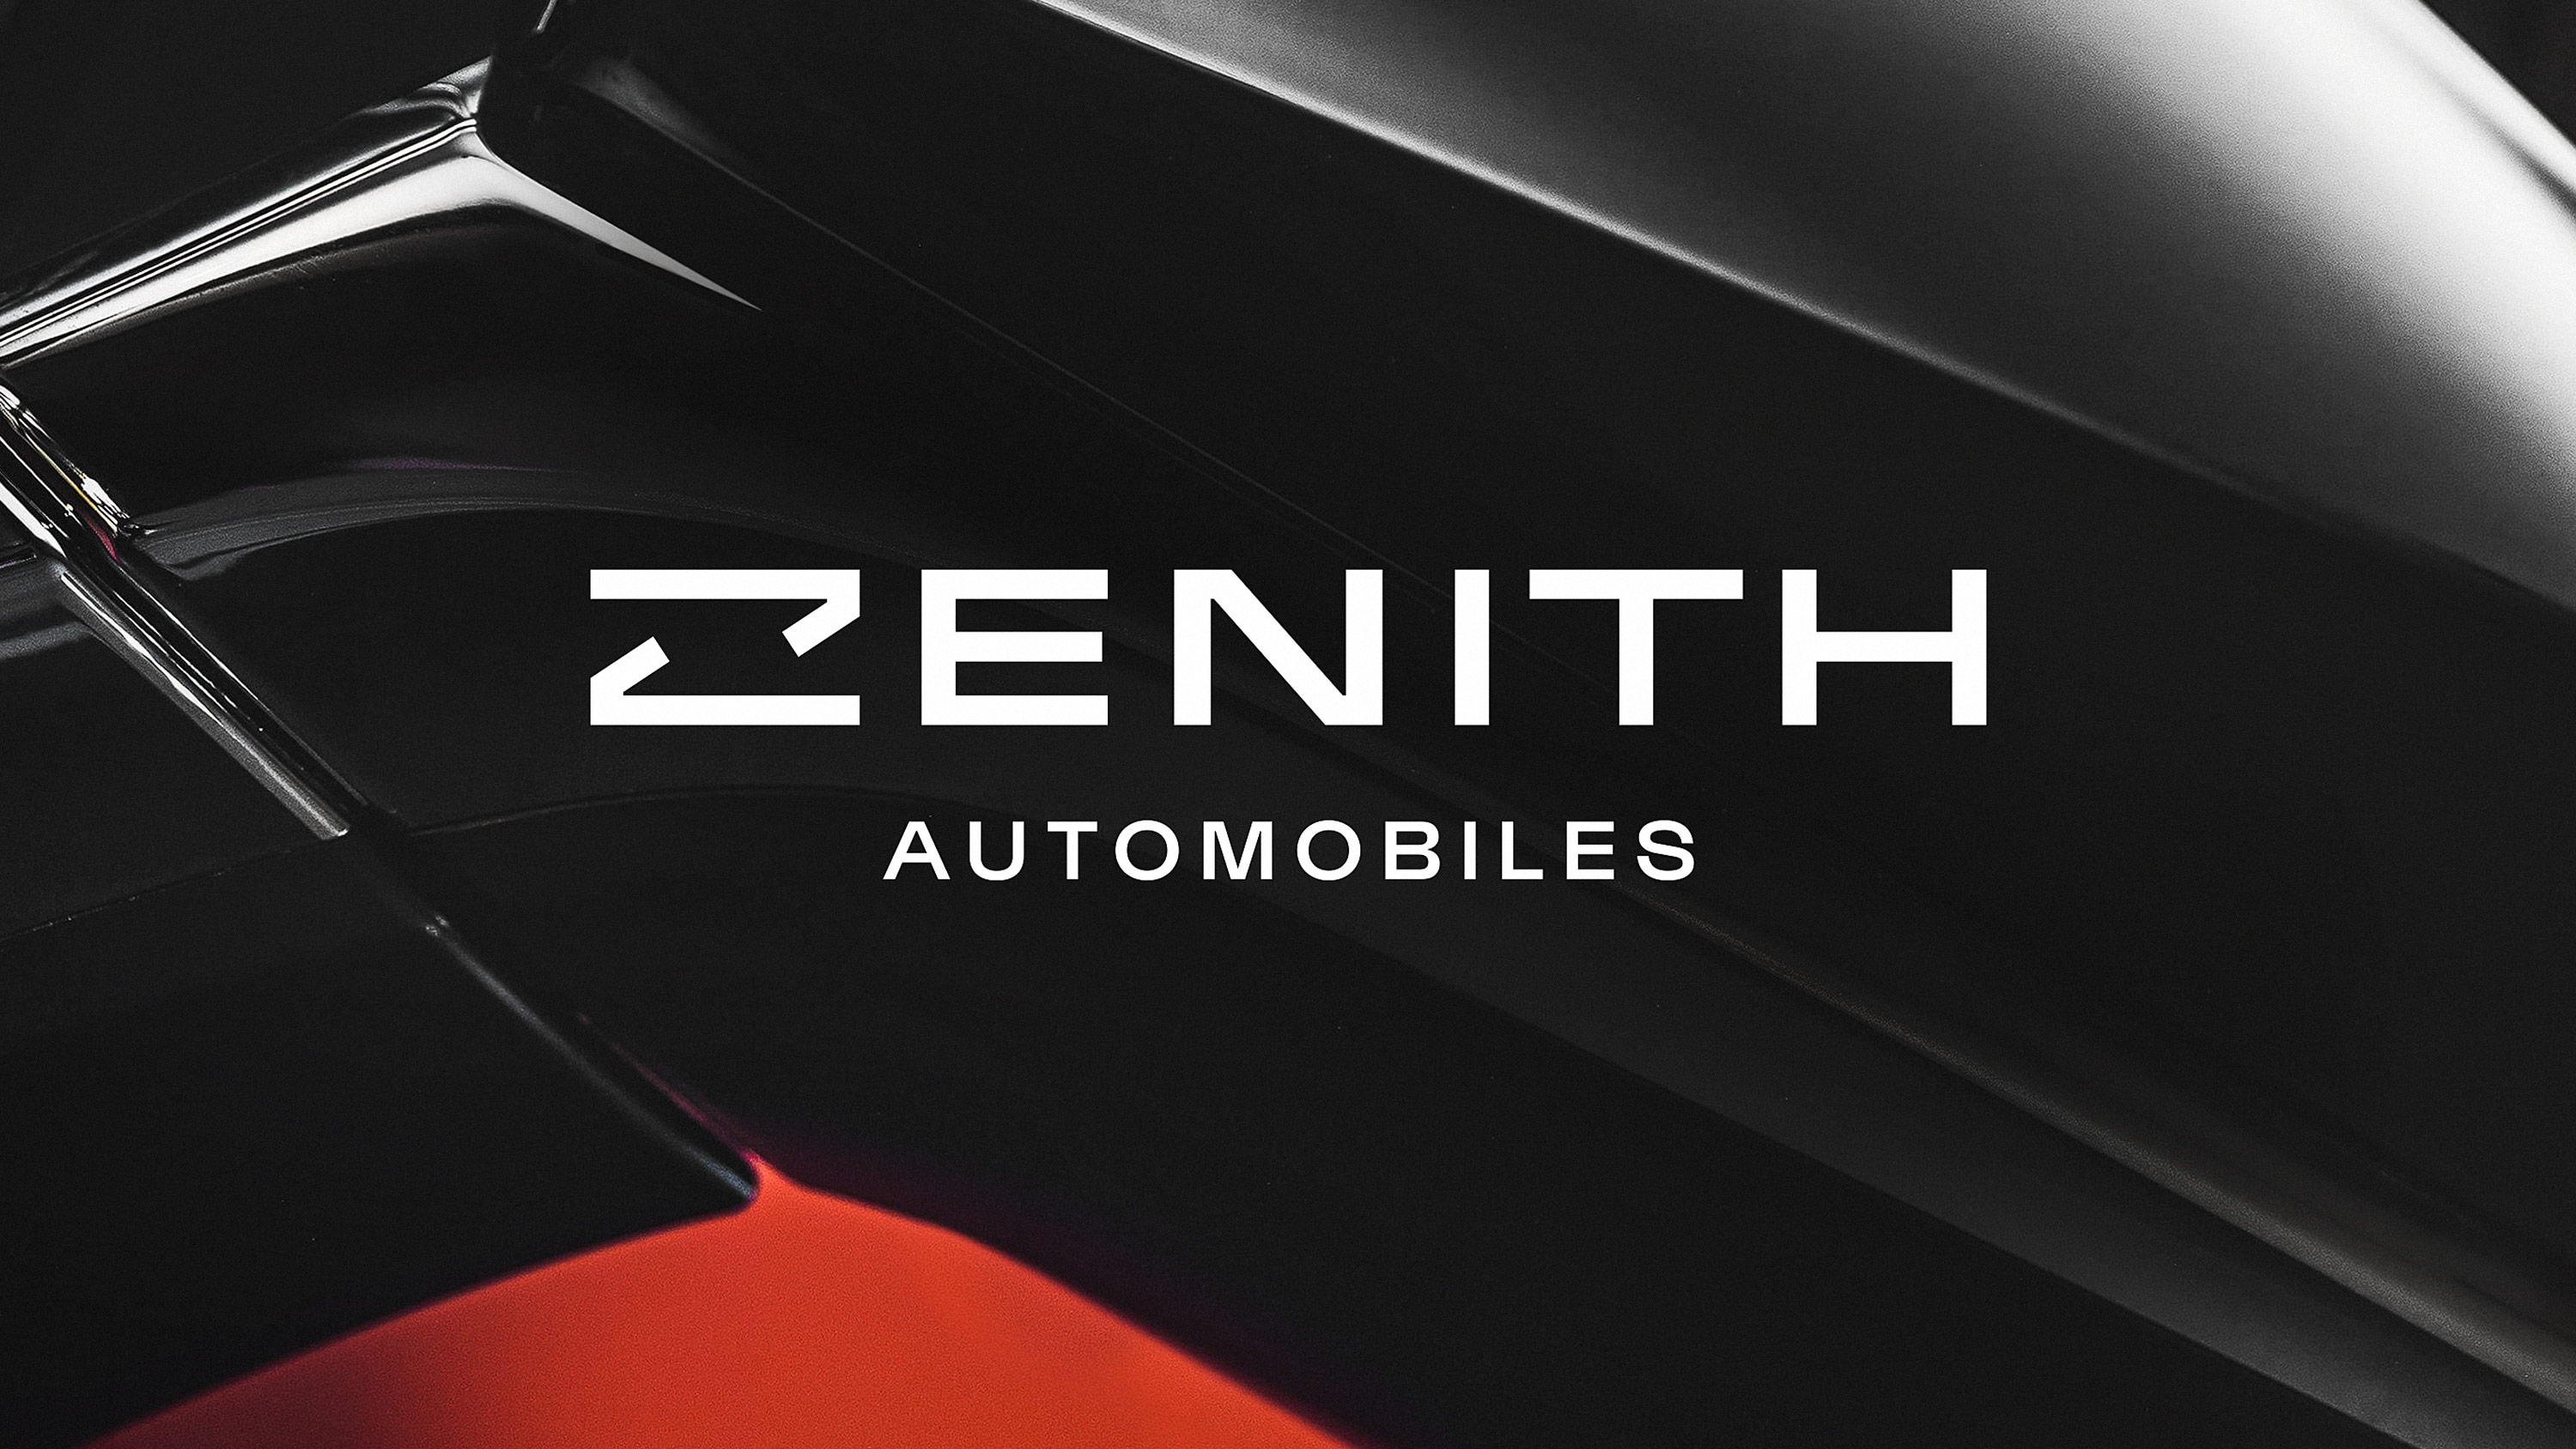 zenith_logo